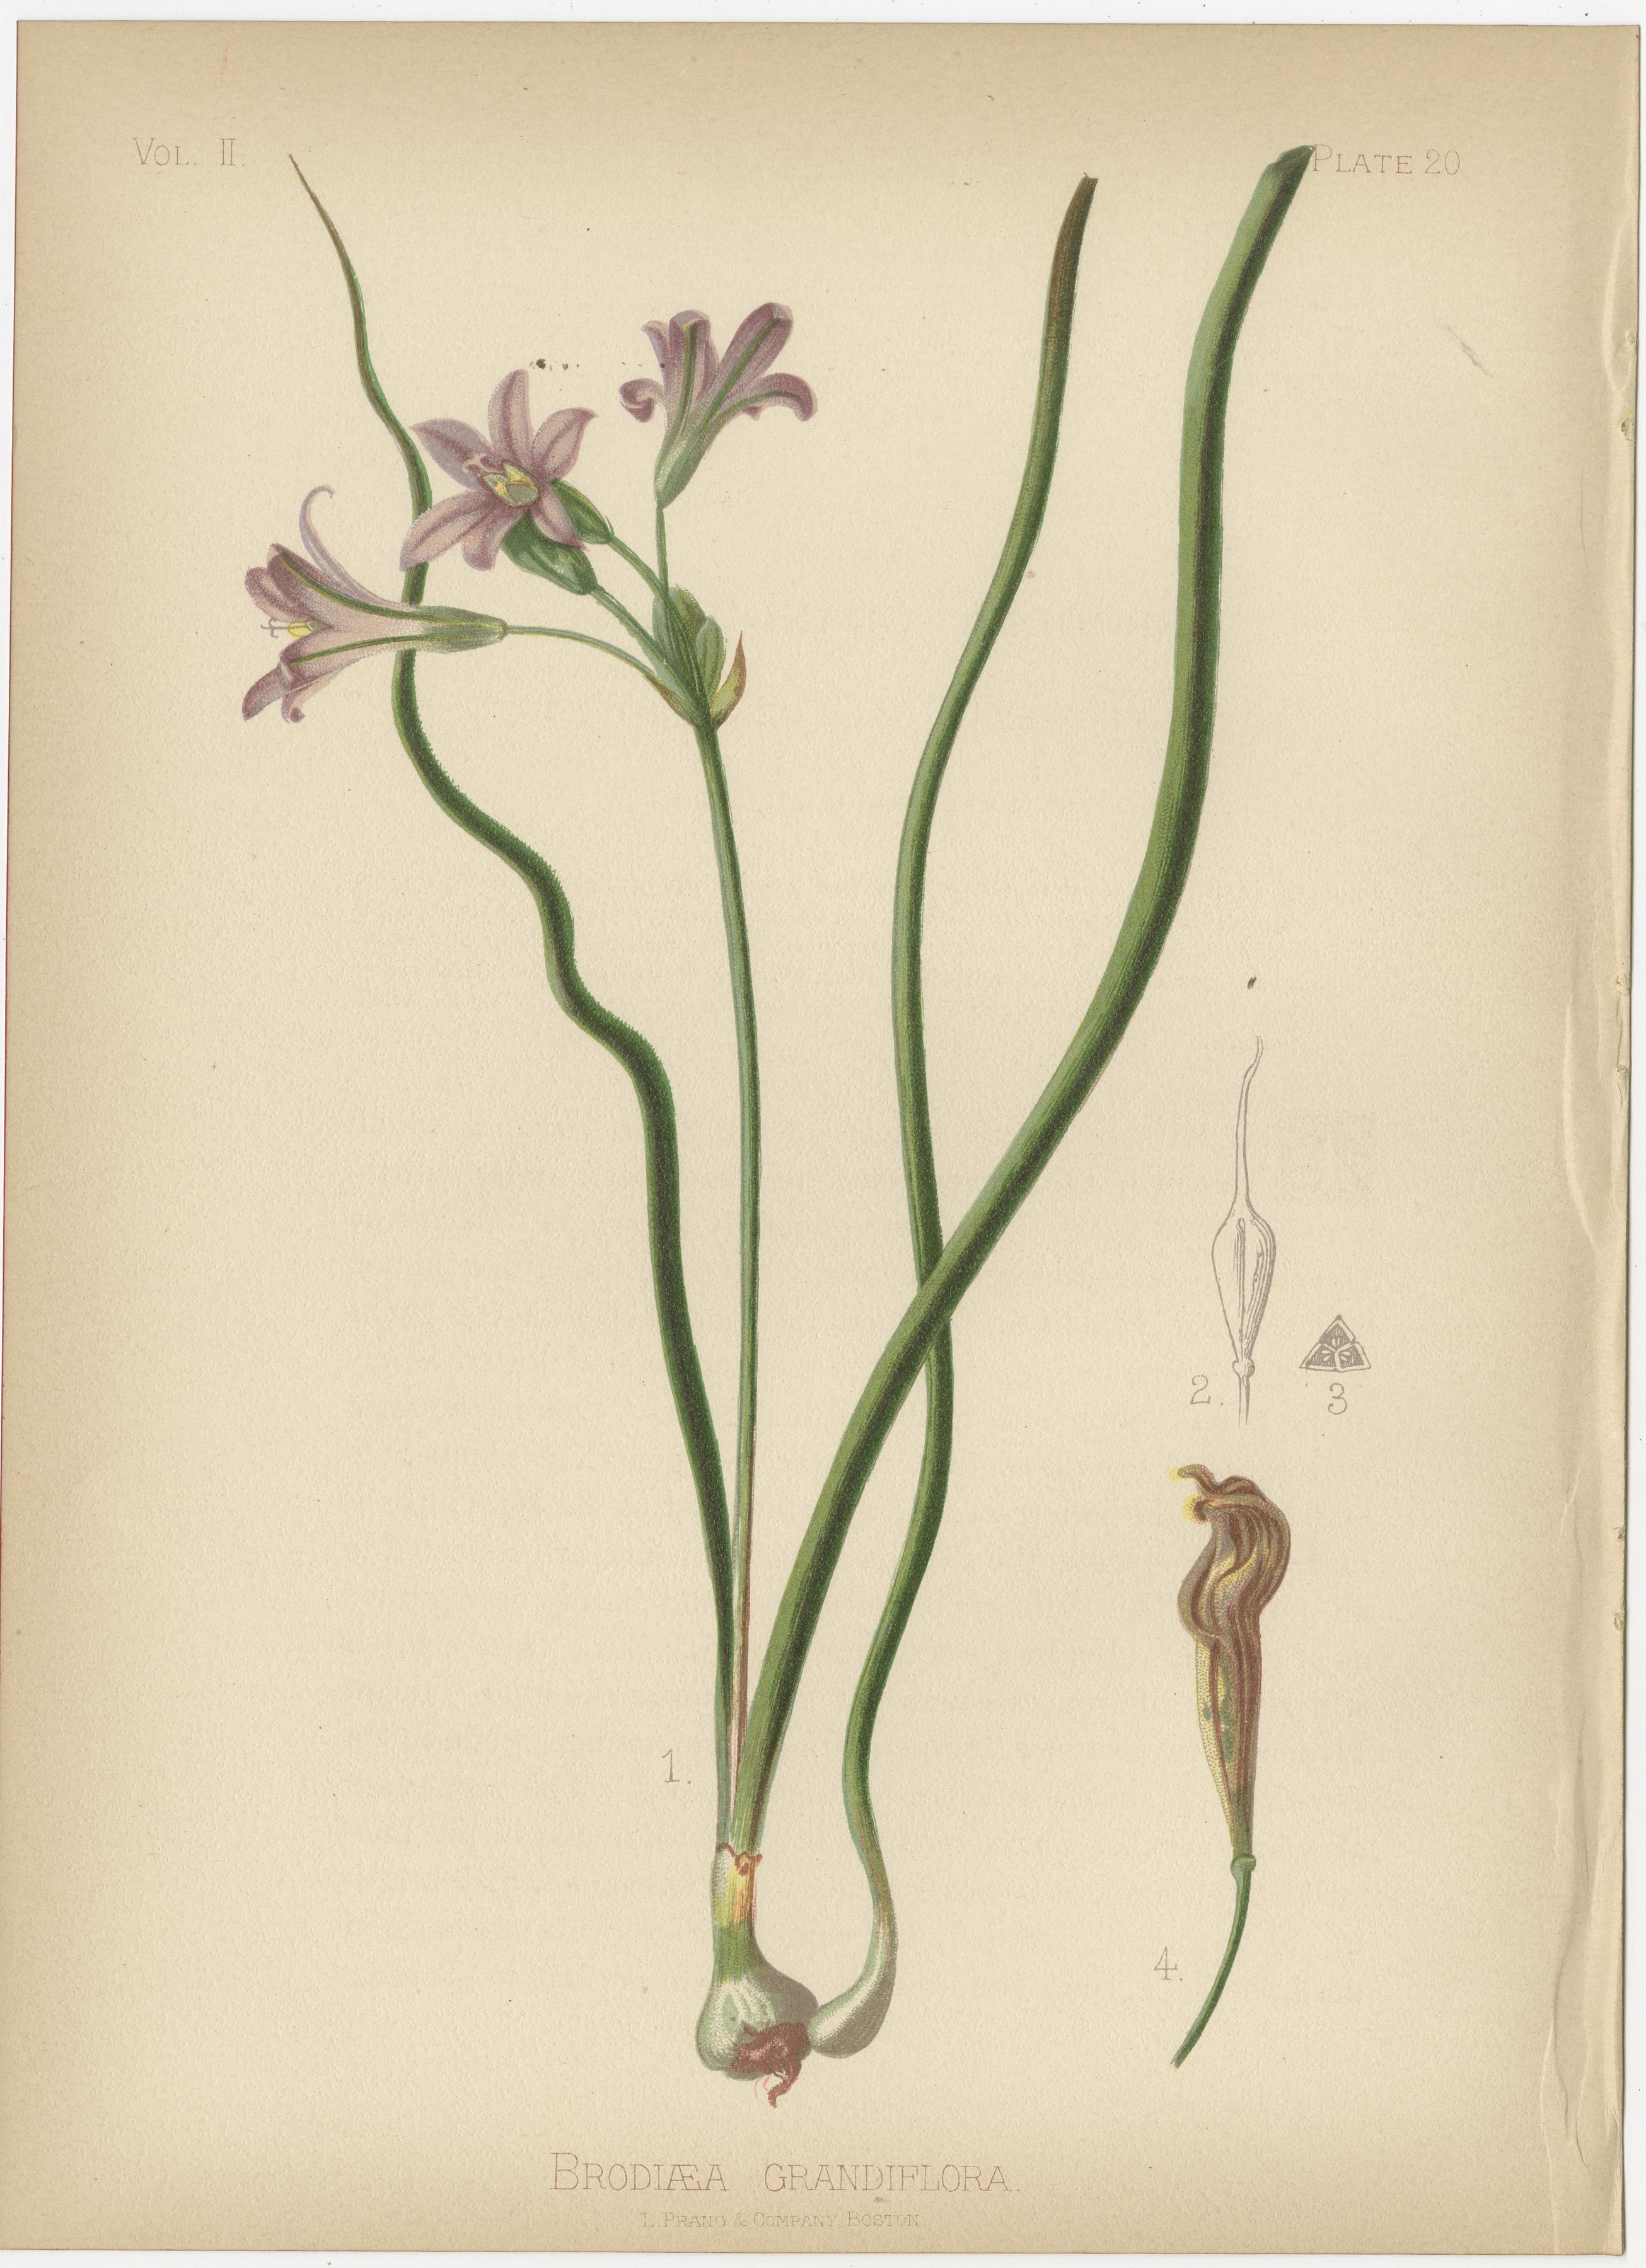 Paper Verdant Vintage: A Collection of 1879 Botanical Illustrations